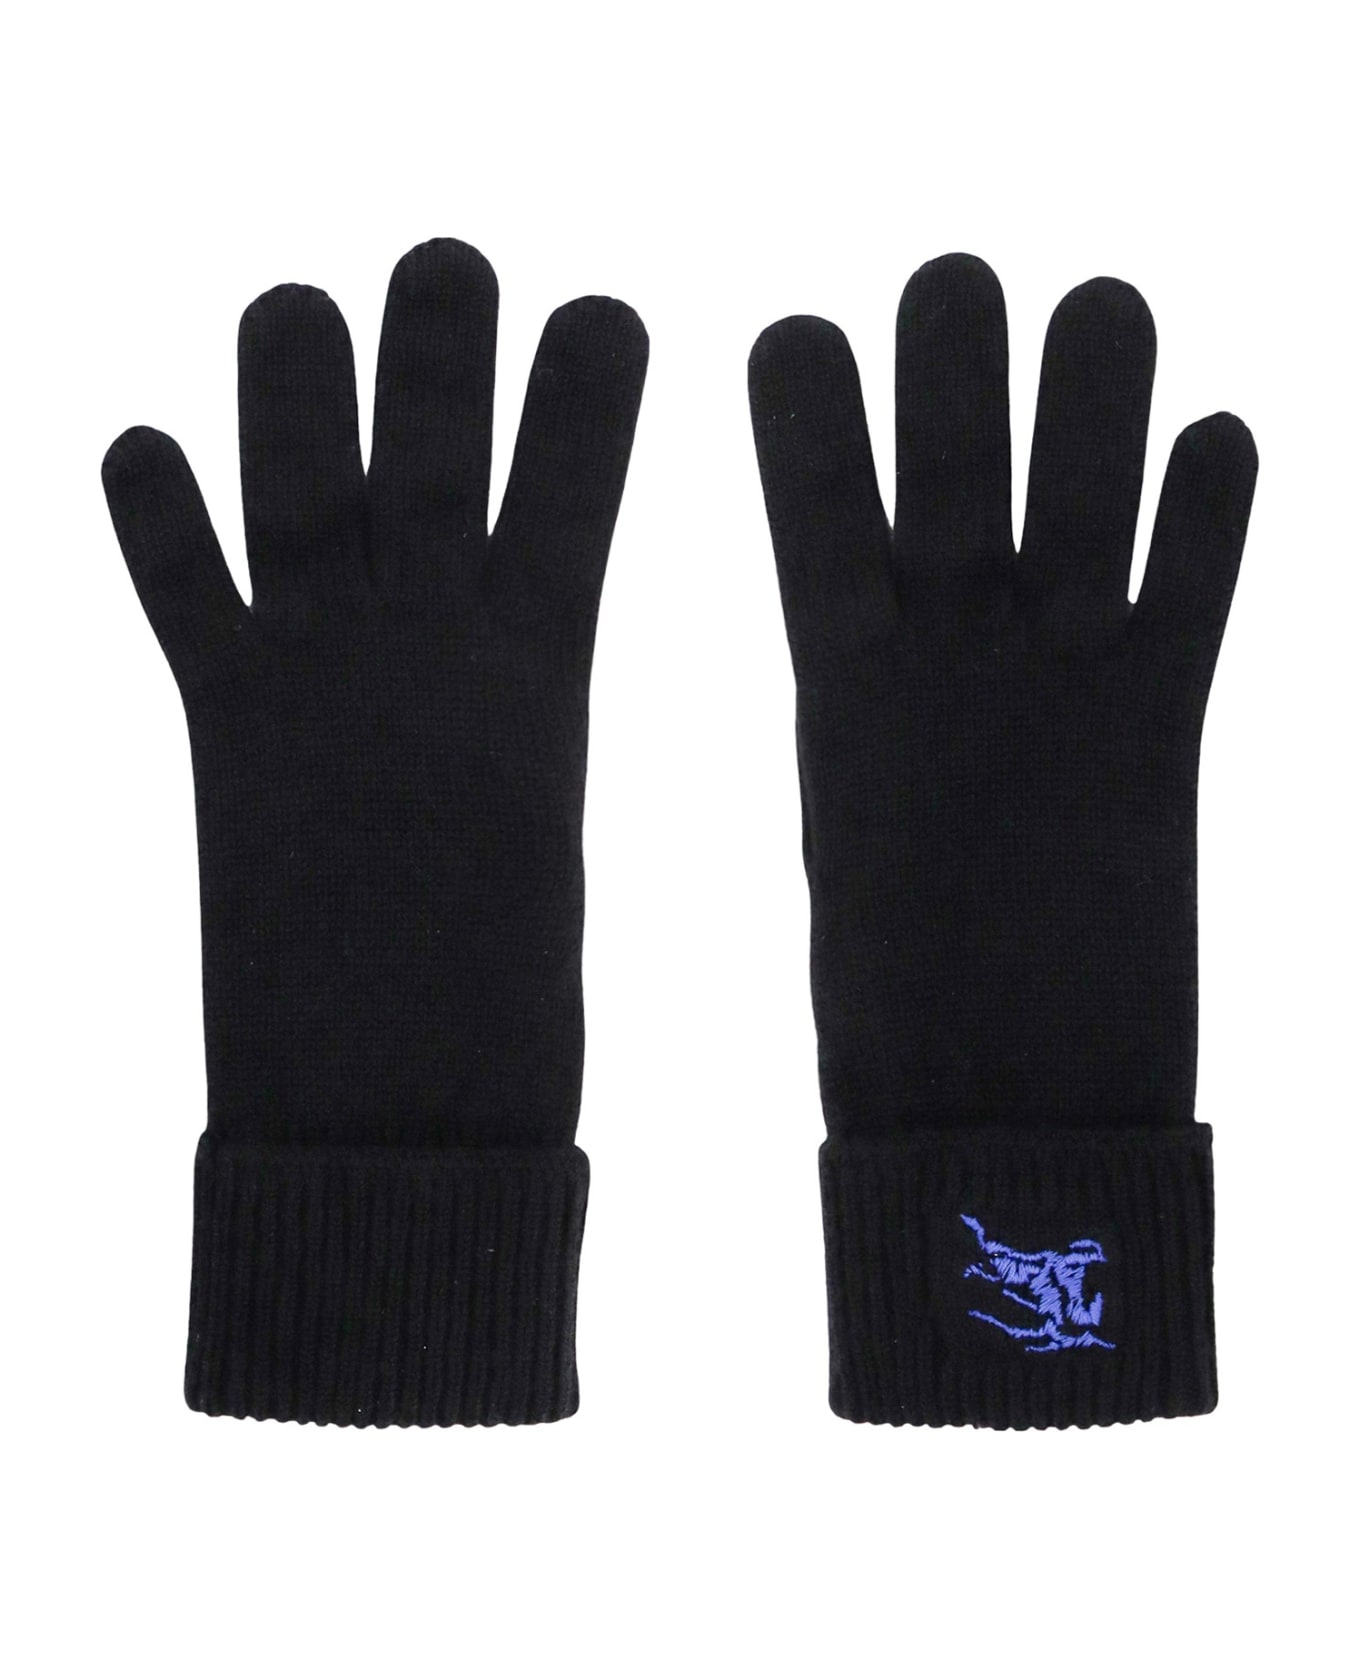 Burberry Cashmere Blend Gloves - Black name:462